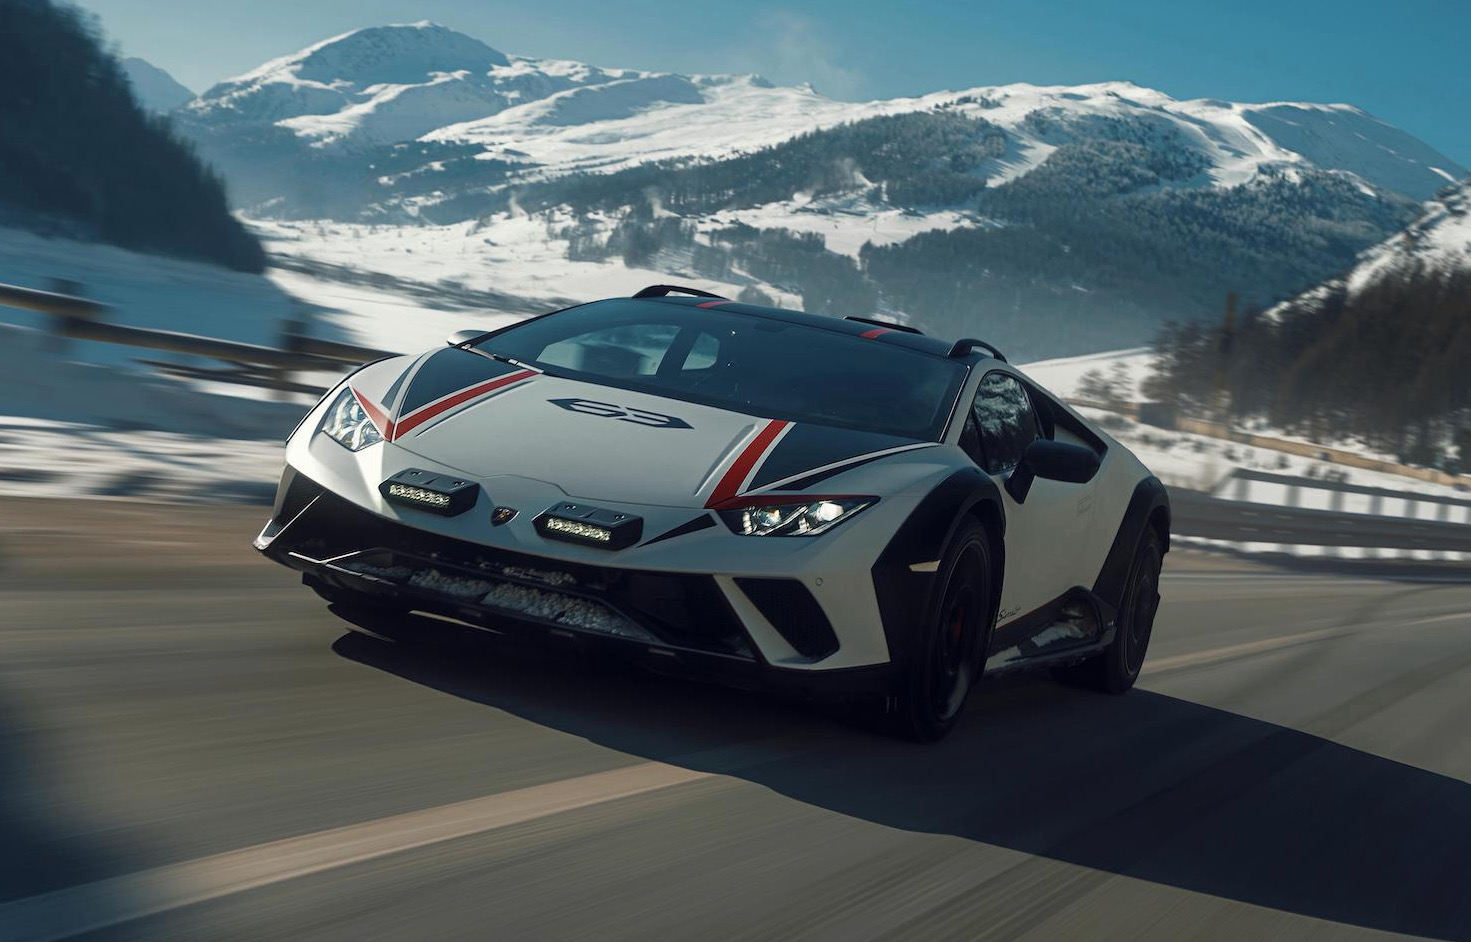 Lamborghini Huracan Sterrato looks spectacular in snow, production starts February